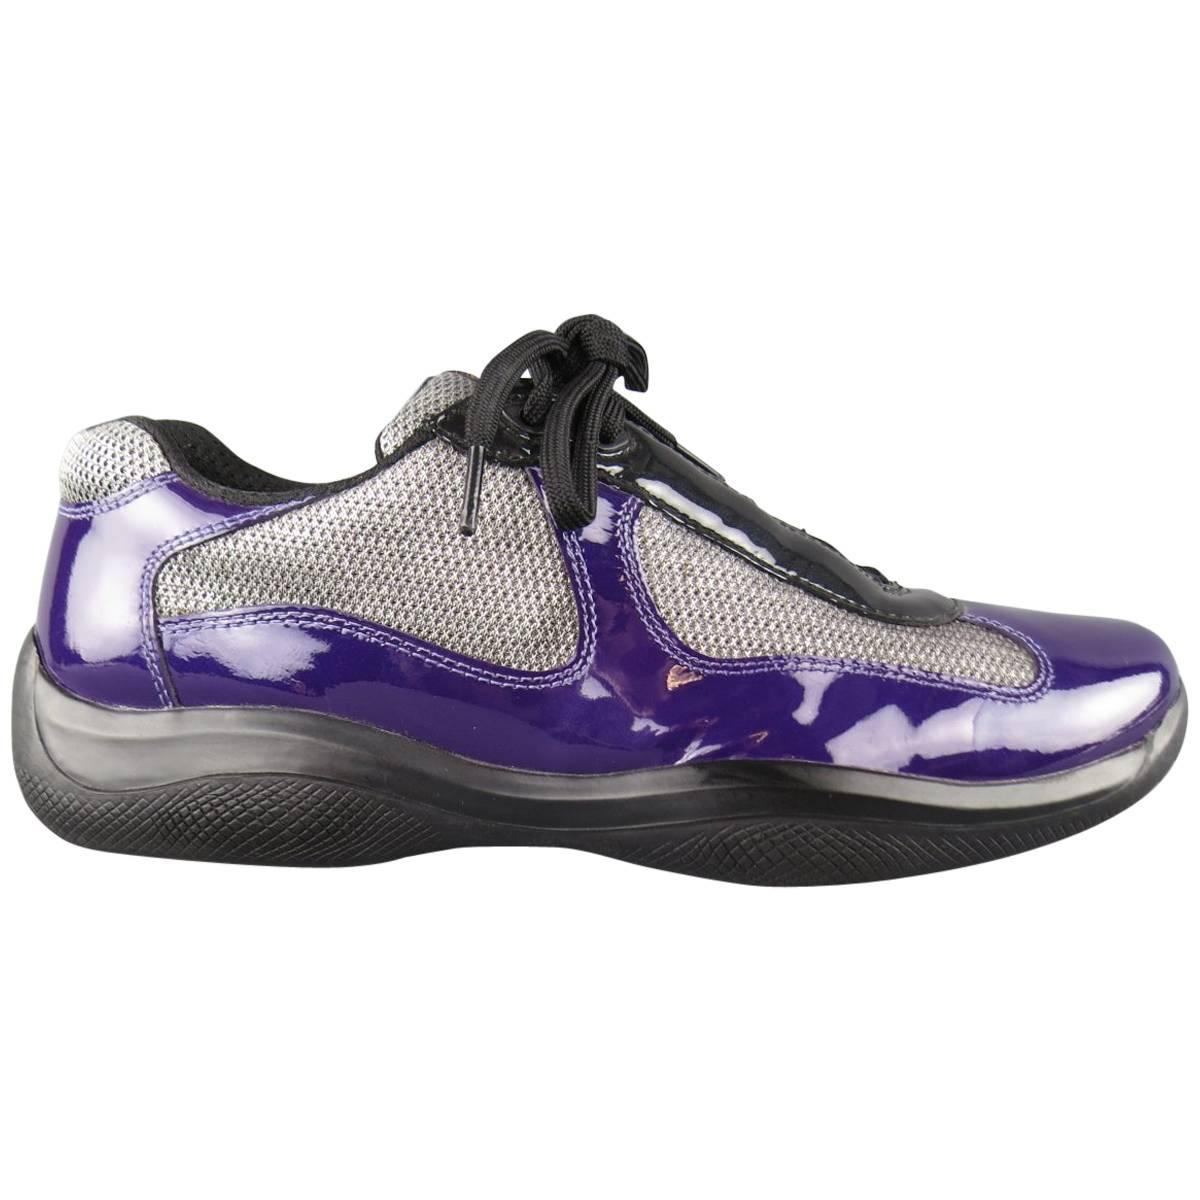 Men's PRADA Size 9.5 Purple & Black Patent Leather Silver Mesh Sneakers